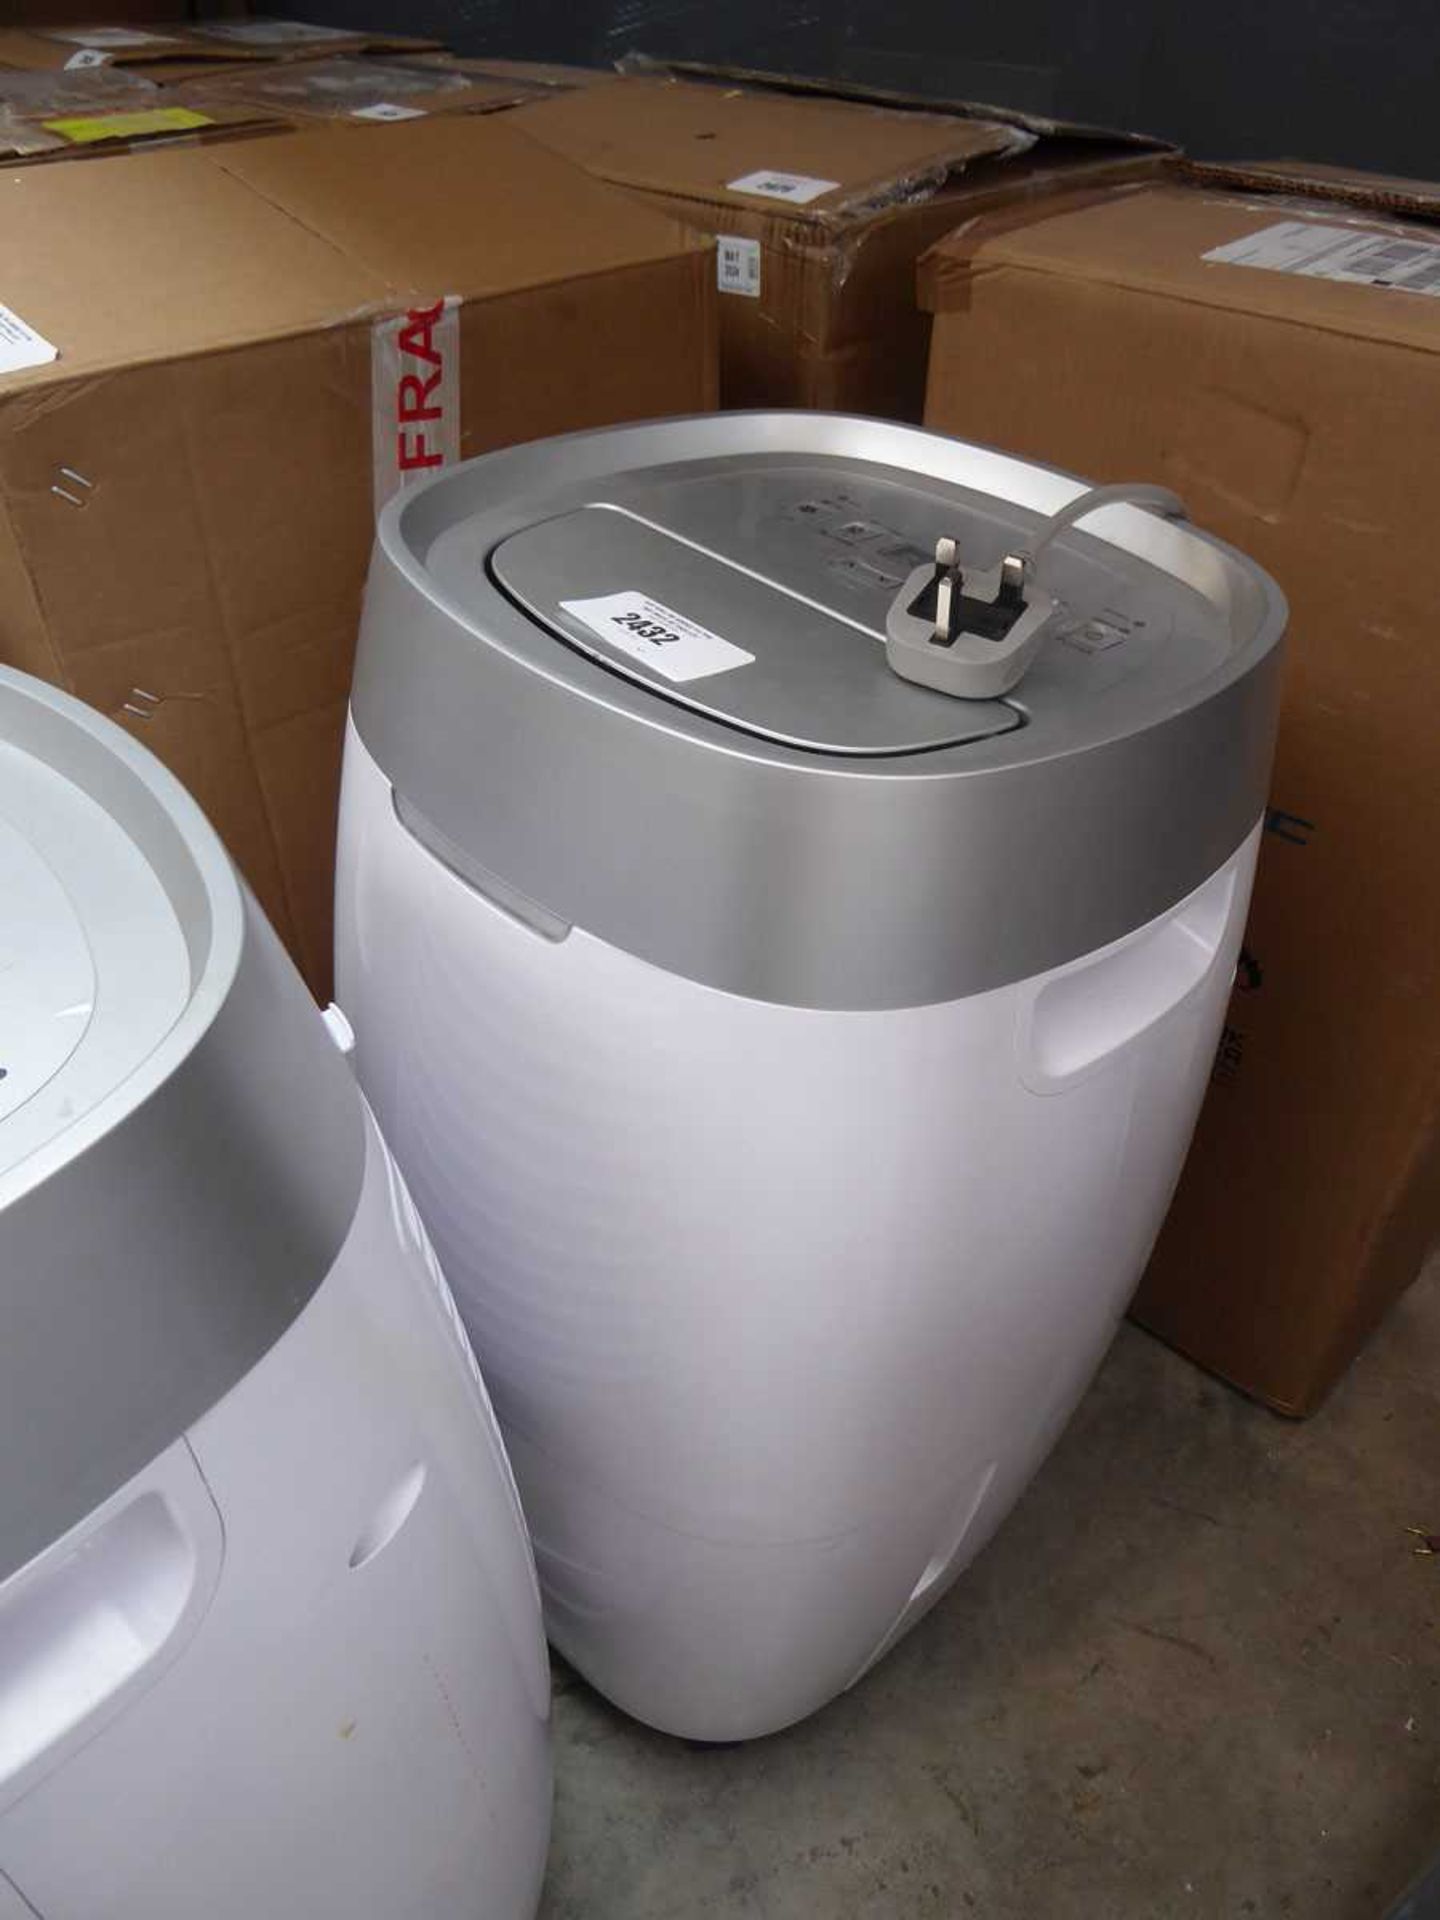 +VAT Unboxed Pro-Elec 30L electric dehumidifier (PELL0309)